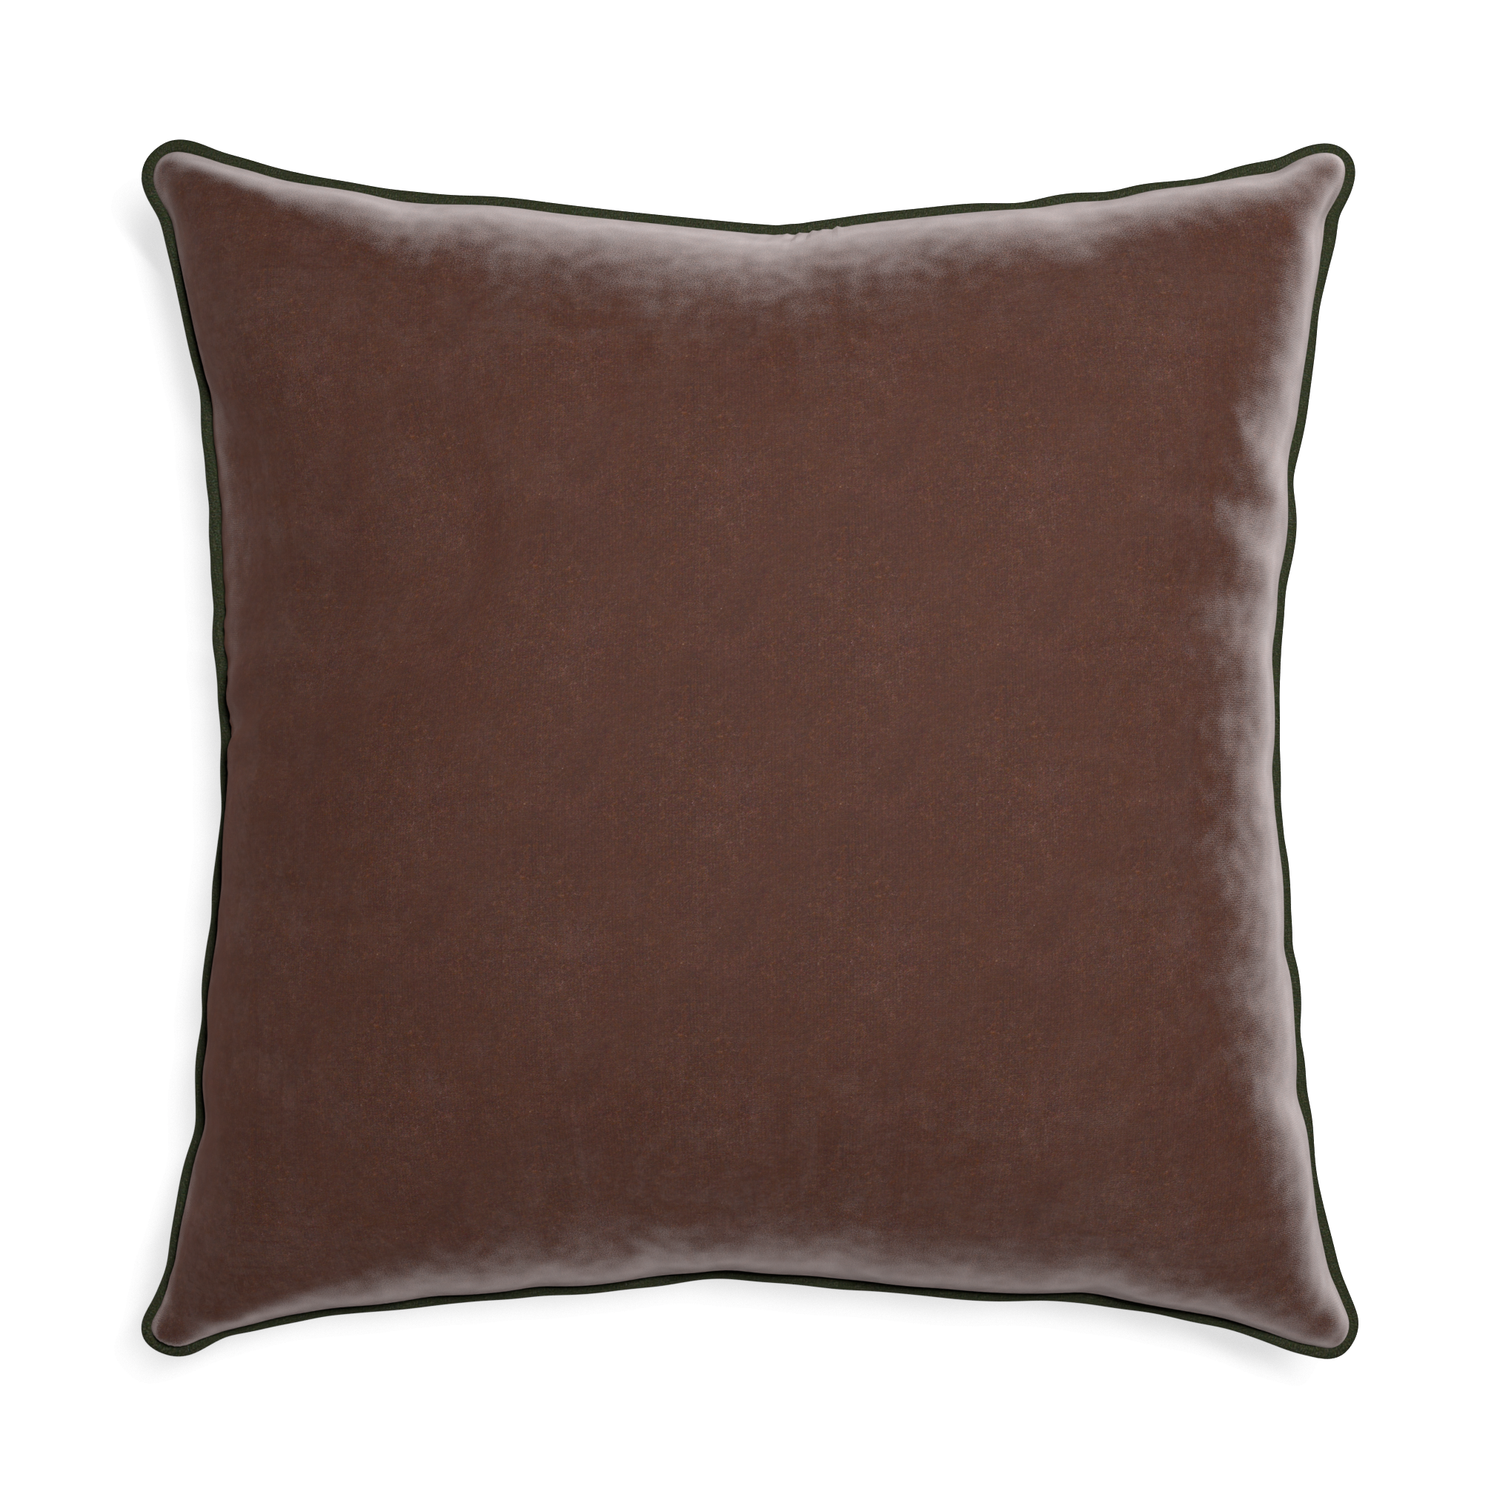 Euro-sham walnut velvet custom pillow with f piping on white background